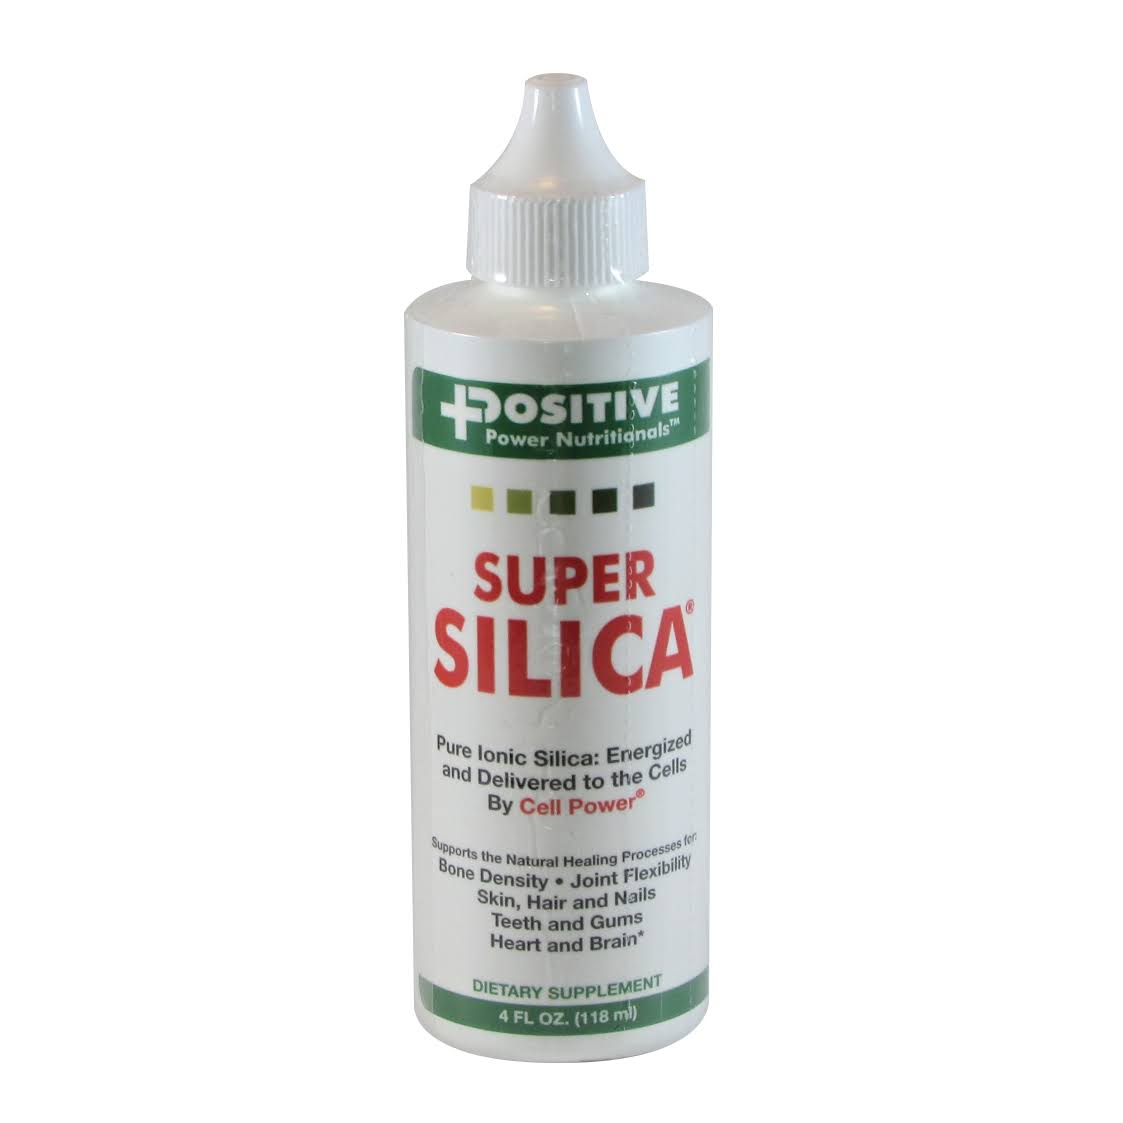 Positive Power Nutritionals Super Silica Dietary Supplement - 4oz